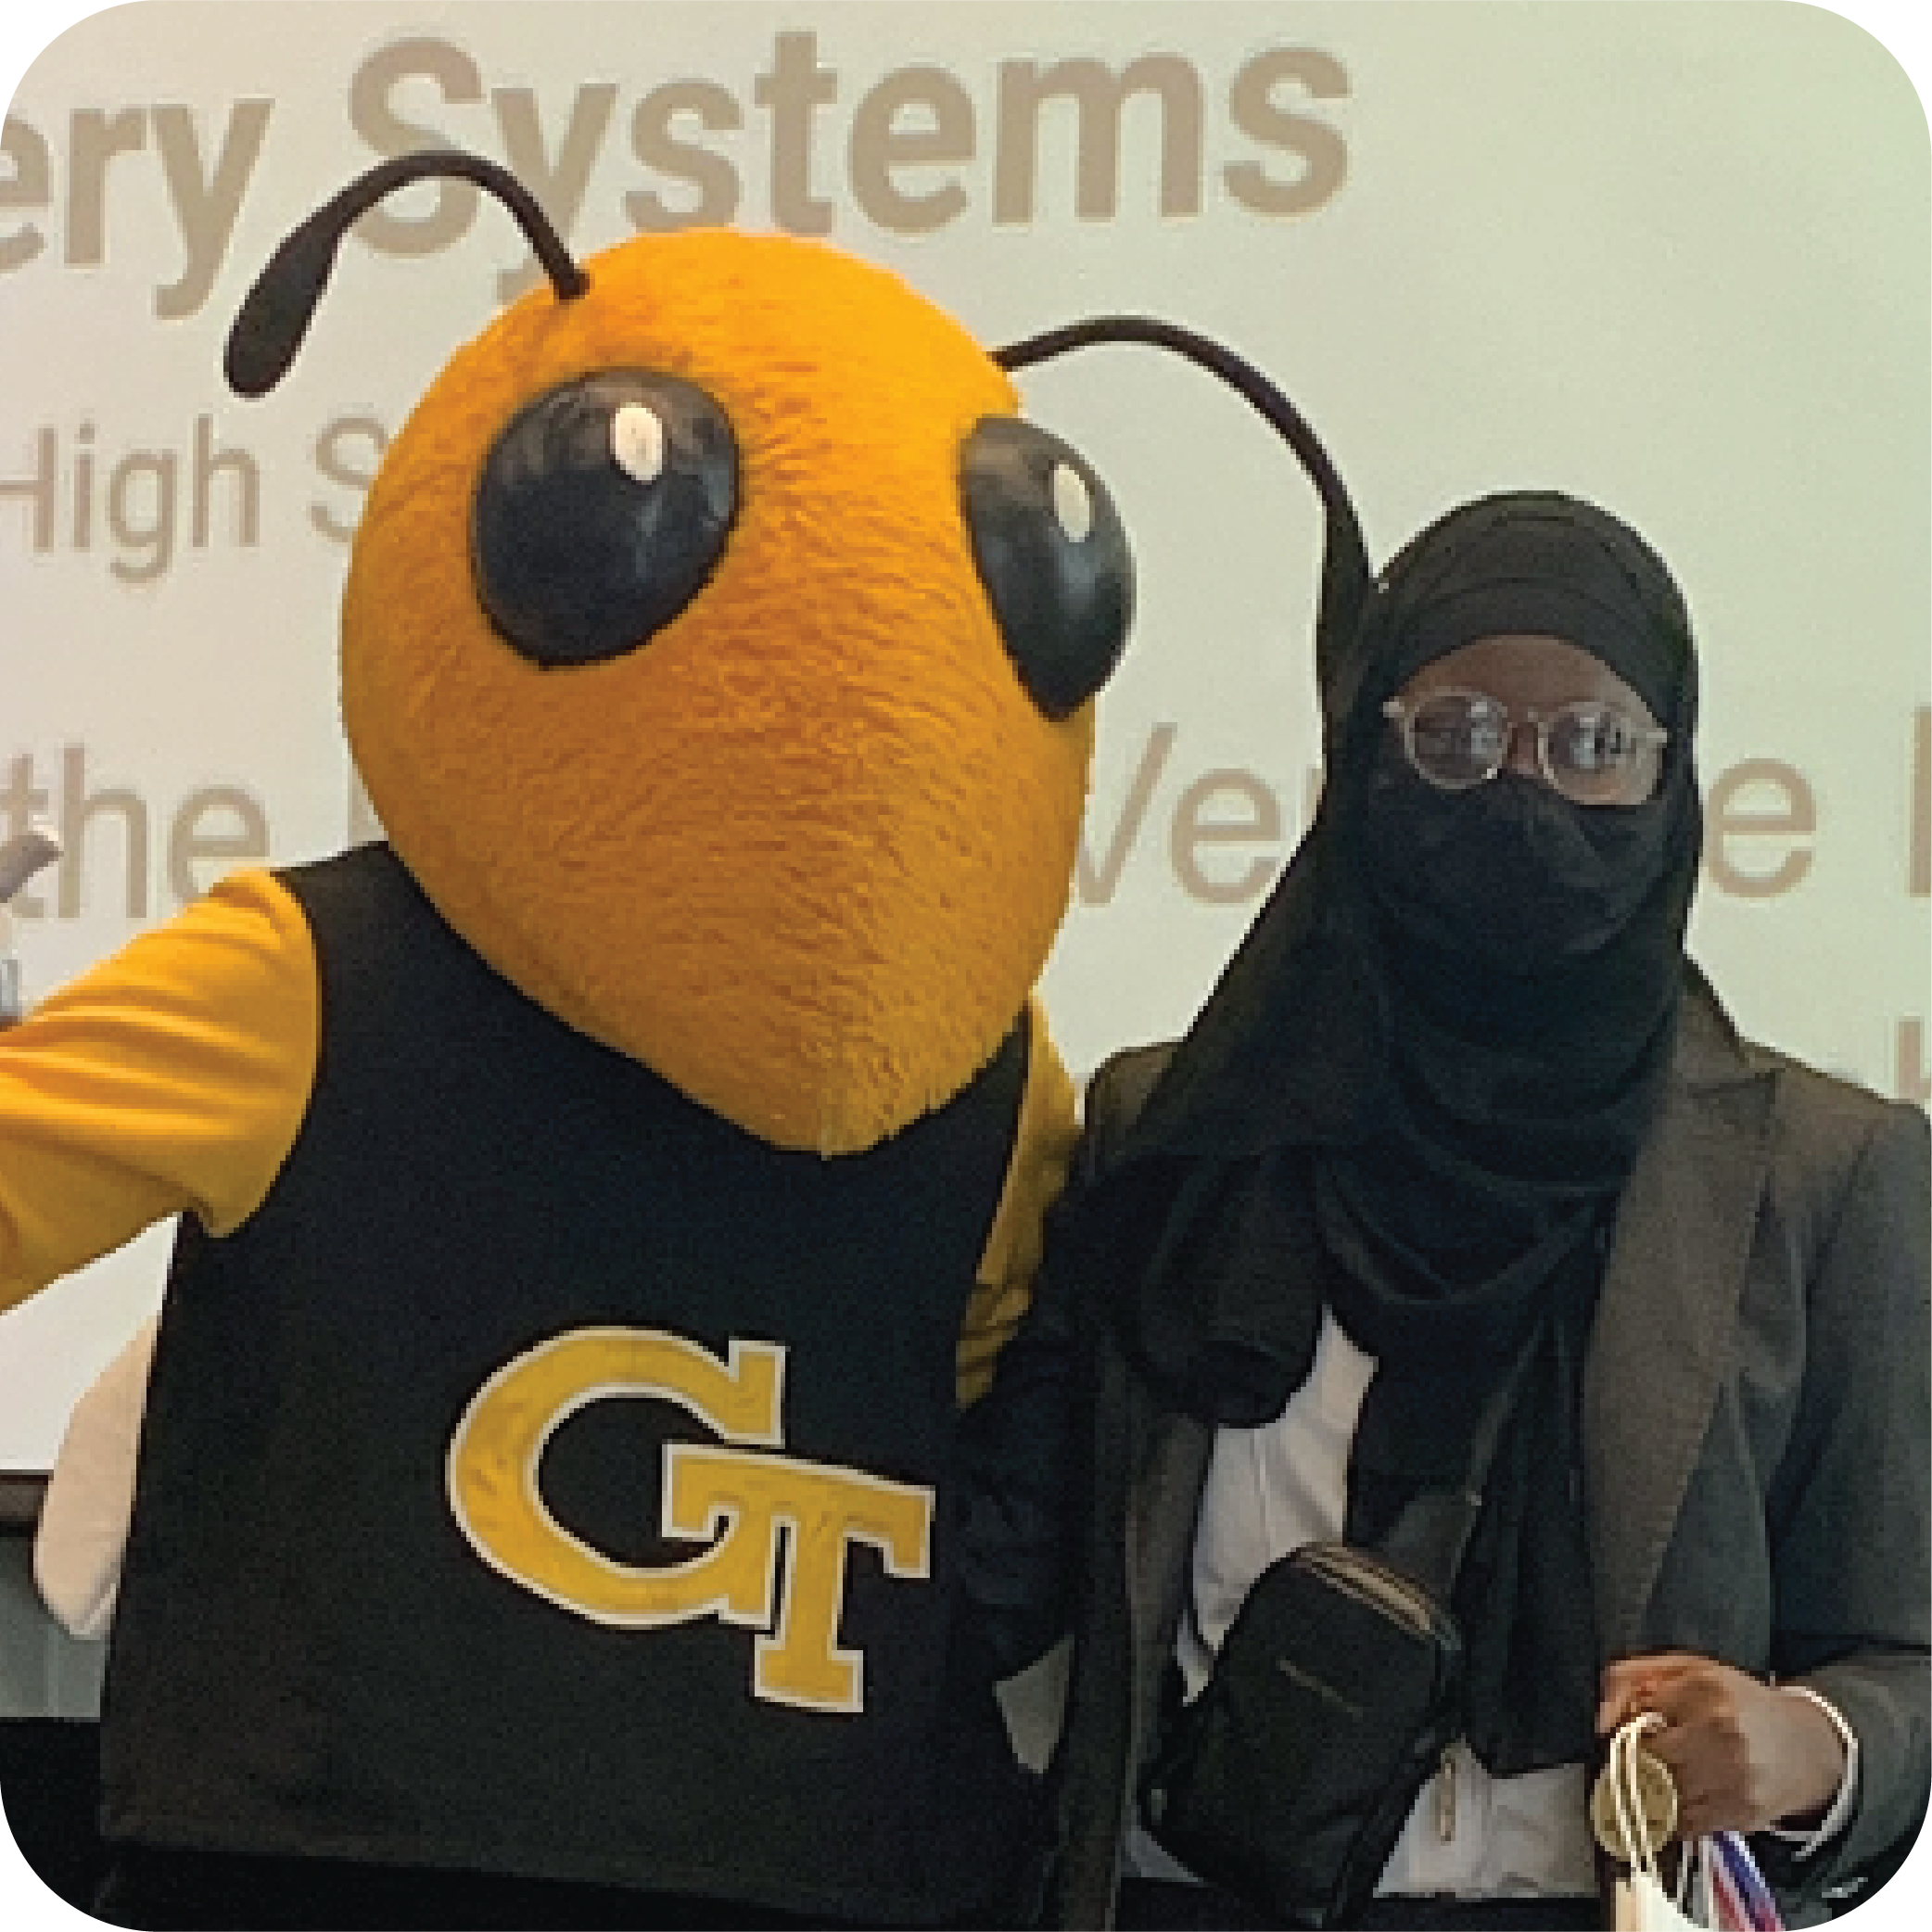 A student standing next to Buzz (Georgia Tech's yellowjacket mascot).